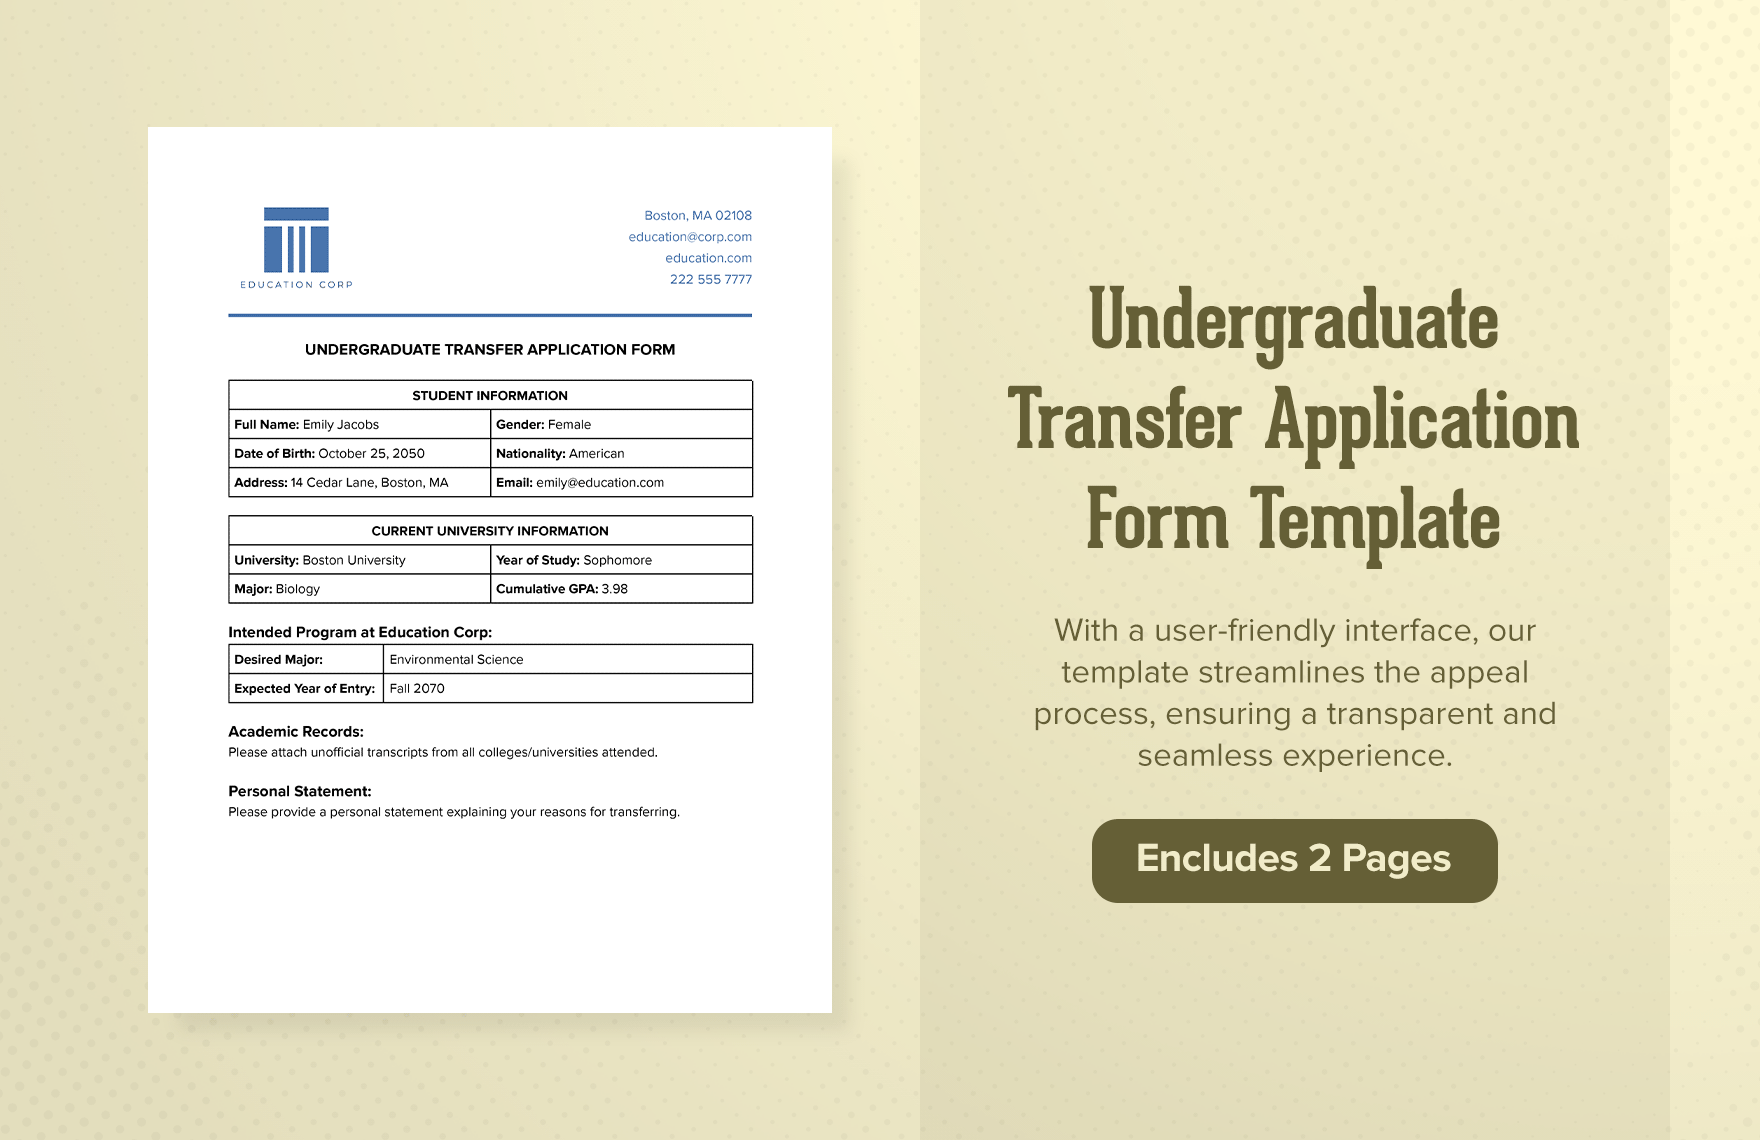 Undergraduate Transfer Application Form Template in Word, Google Docs, PDF